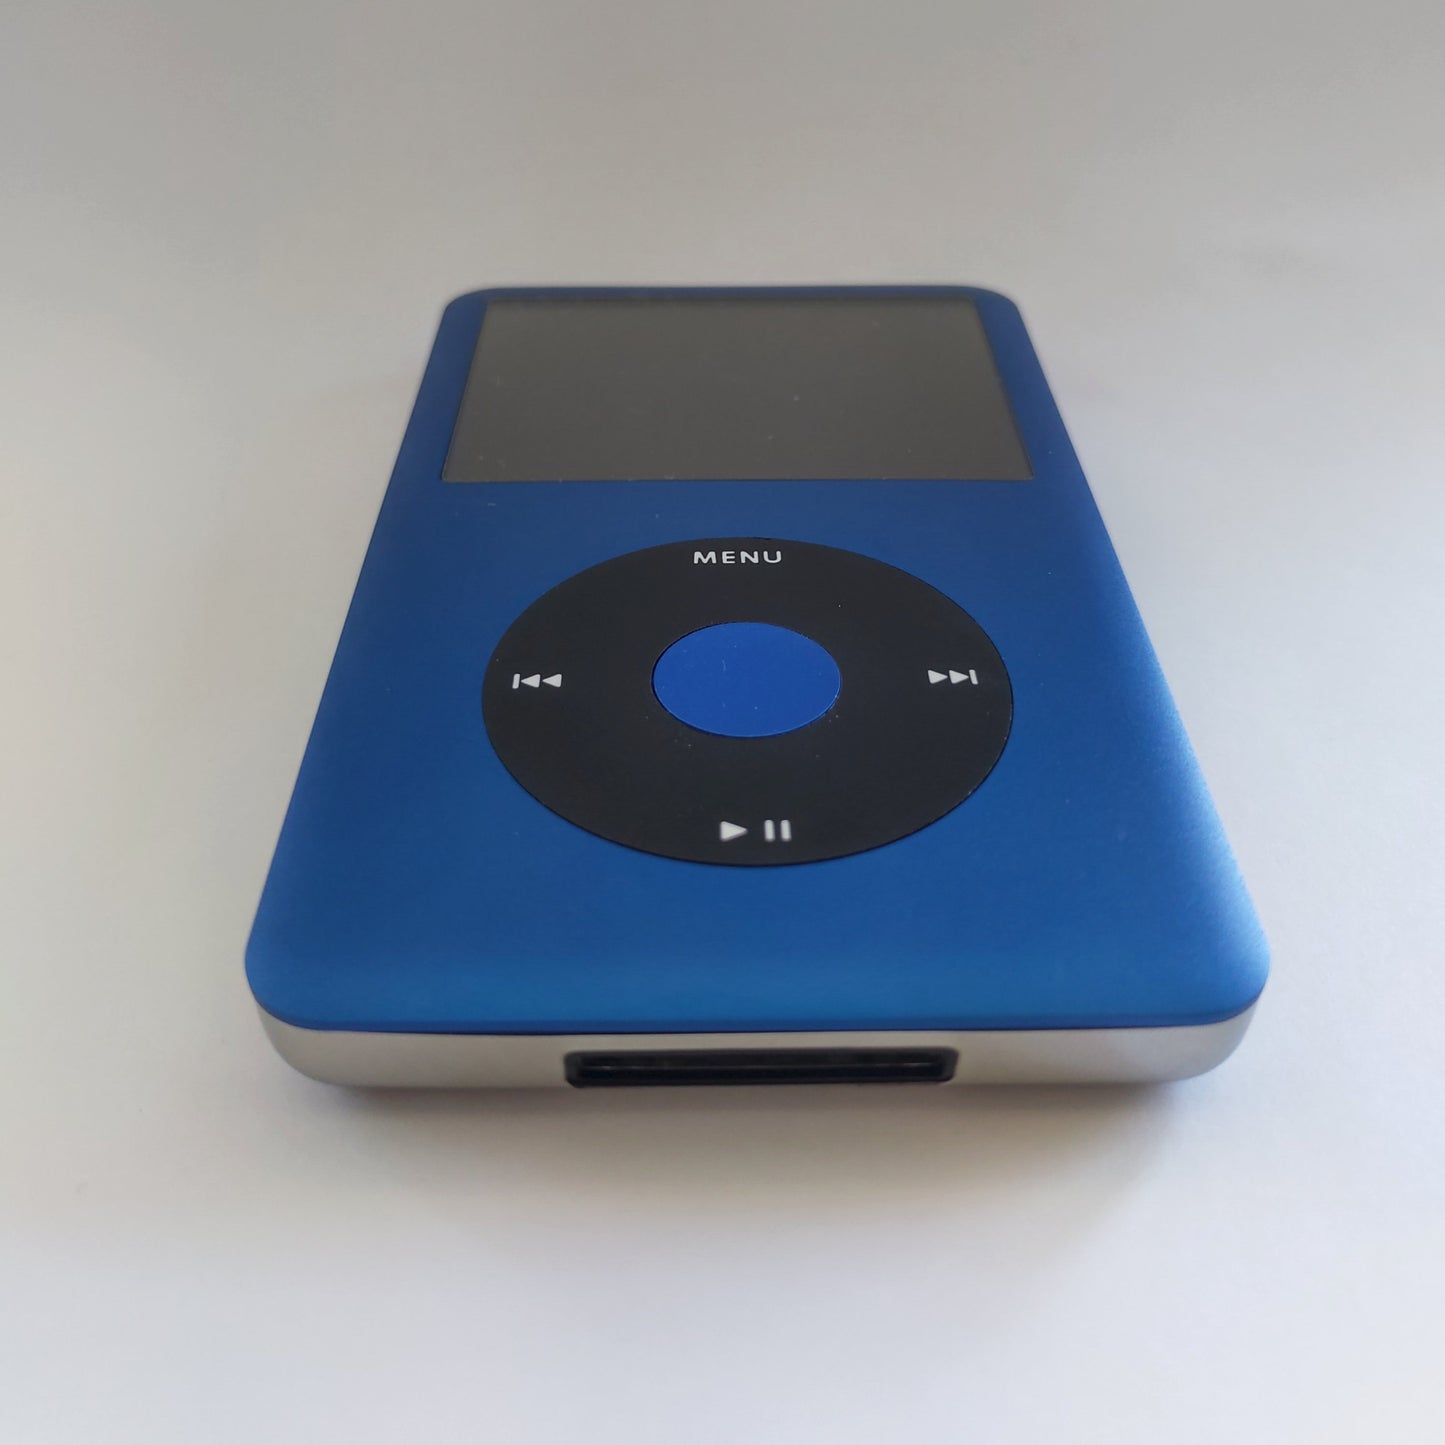 Blue iPod classic bottom view